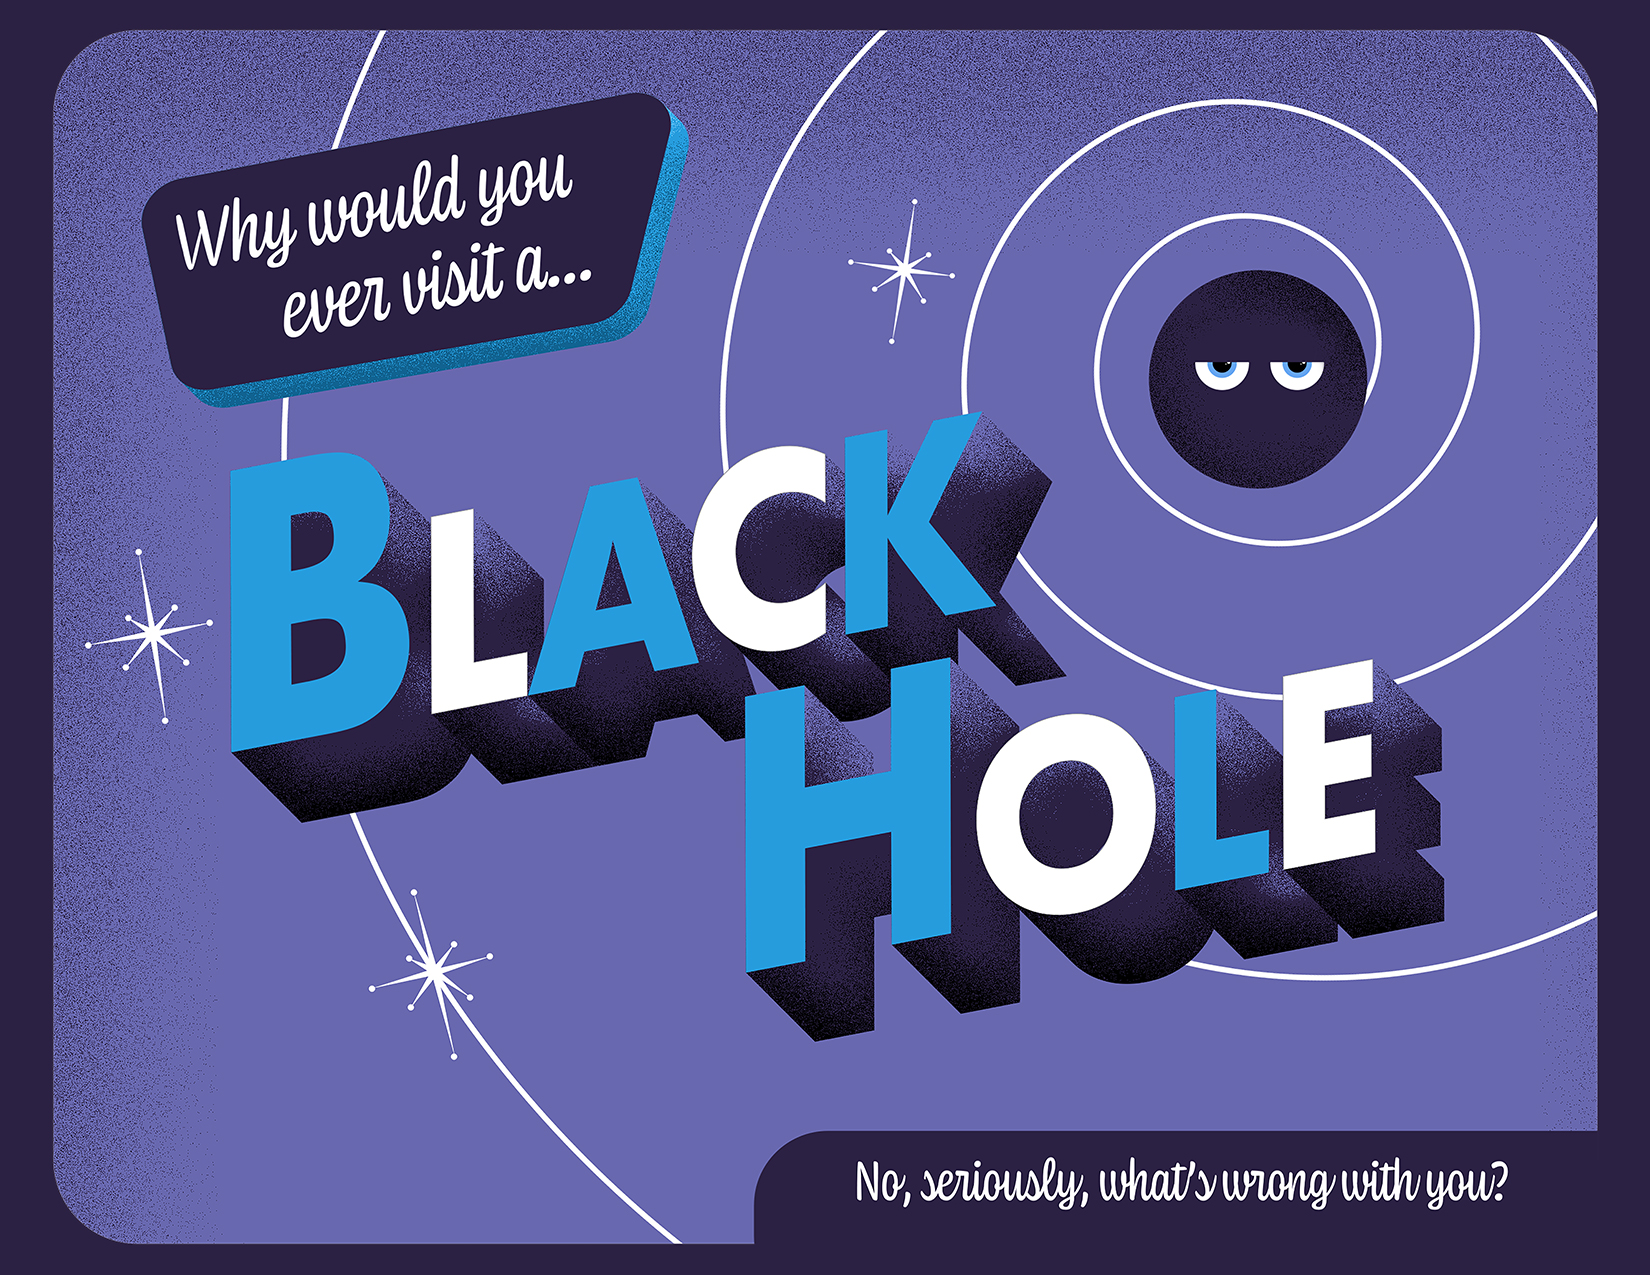 Cartoon postcard for an imagined trip to a black hole